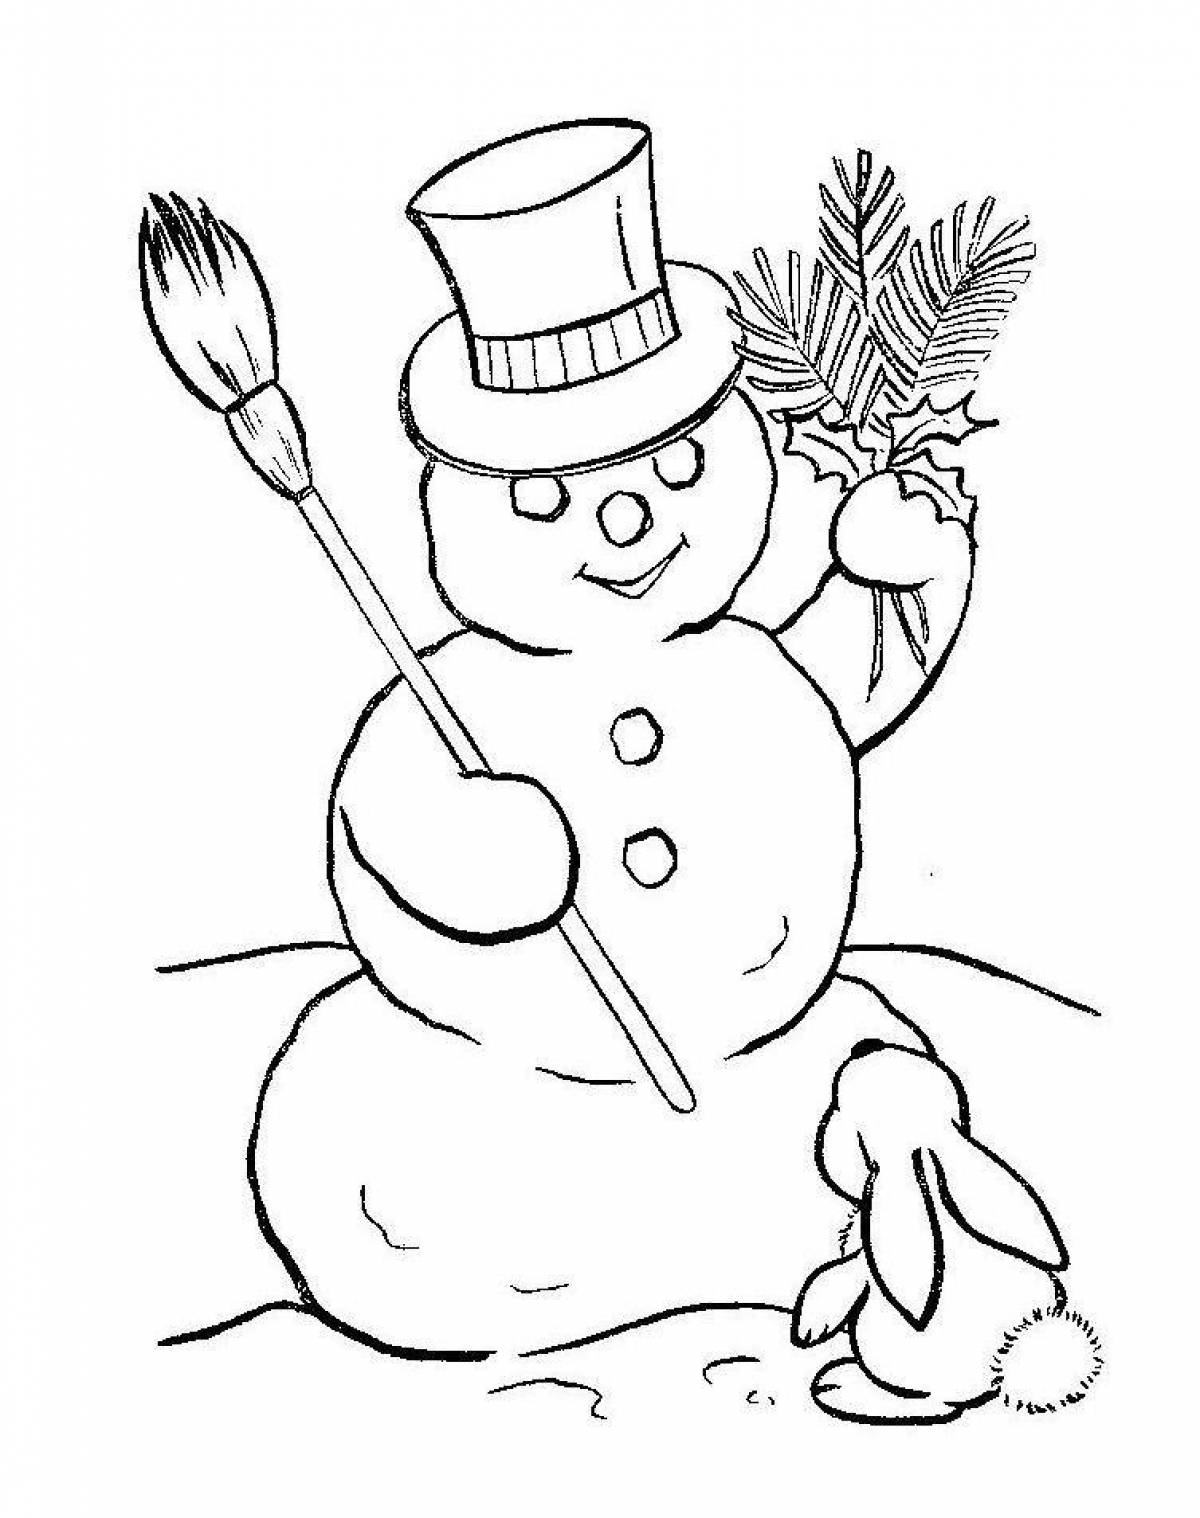 Fabulous snowman coloring page